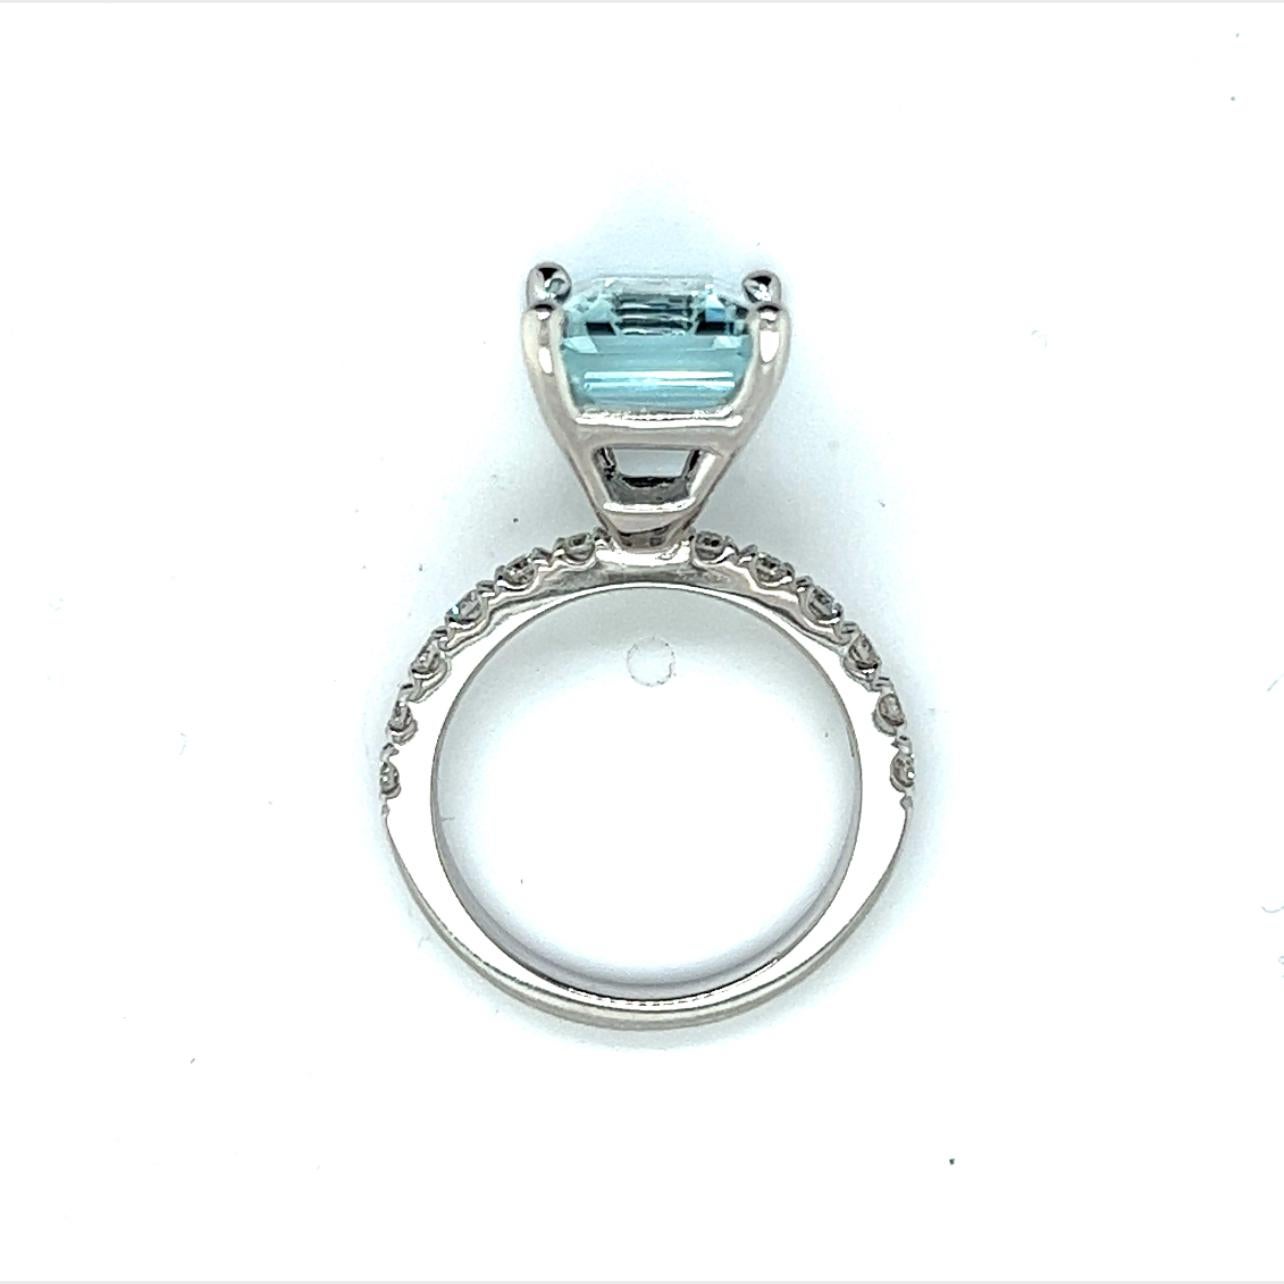 Emerald Cut Natural Aquamarine Diamond Ring 14k W Gold 5.78 TCW Certified For Sale